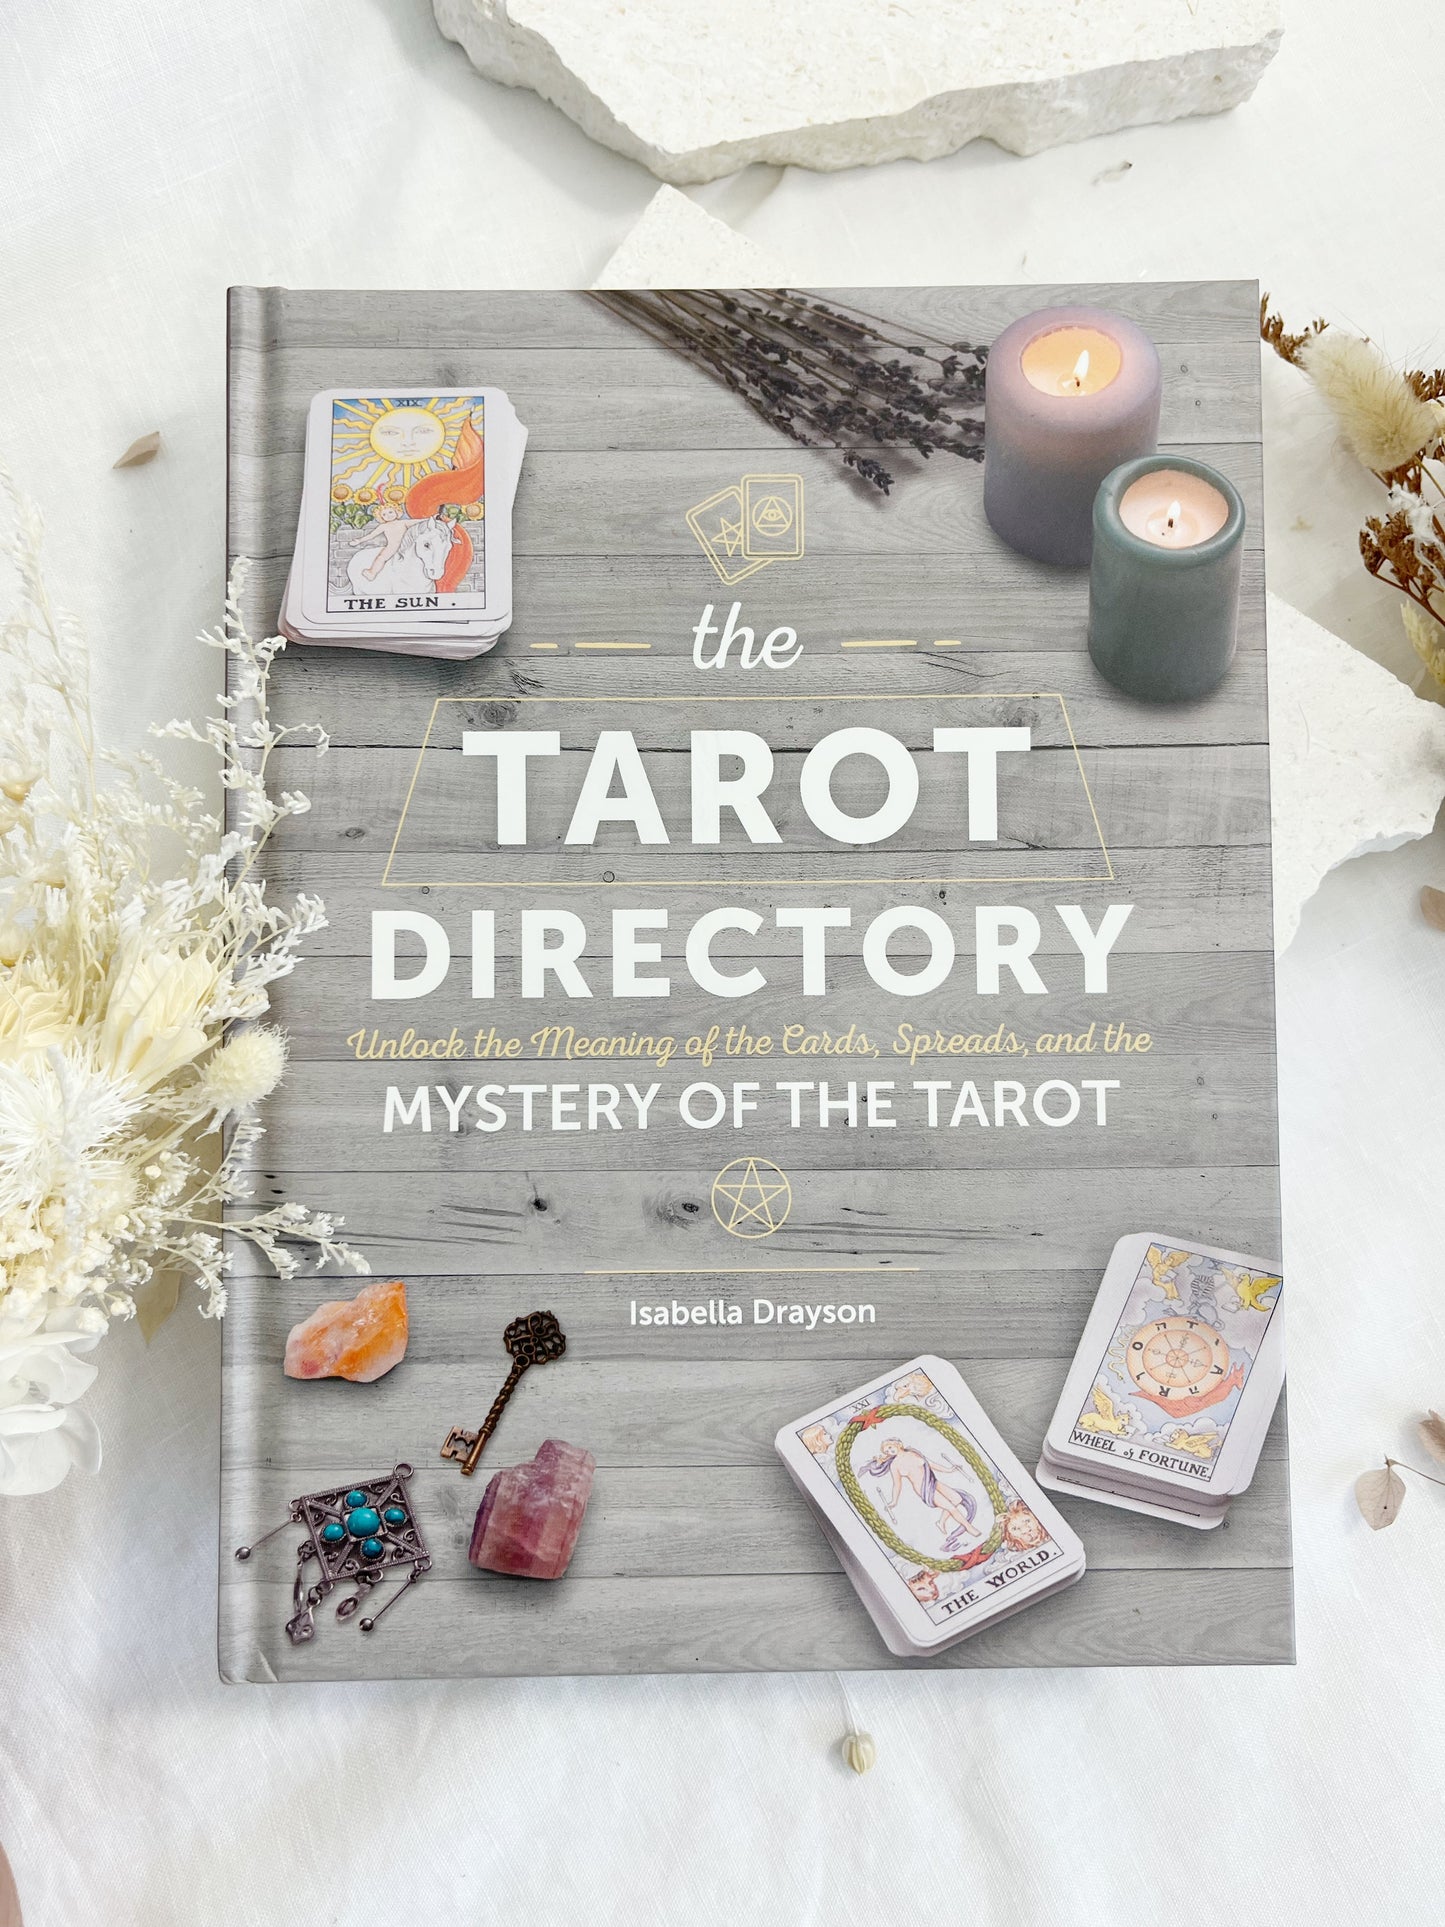 THE TAROT DIRECTORY | ISABELLA DRAYSON